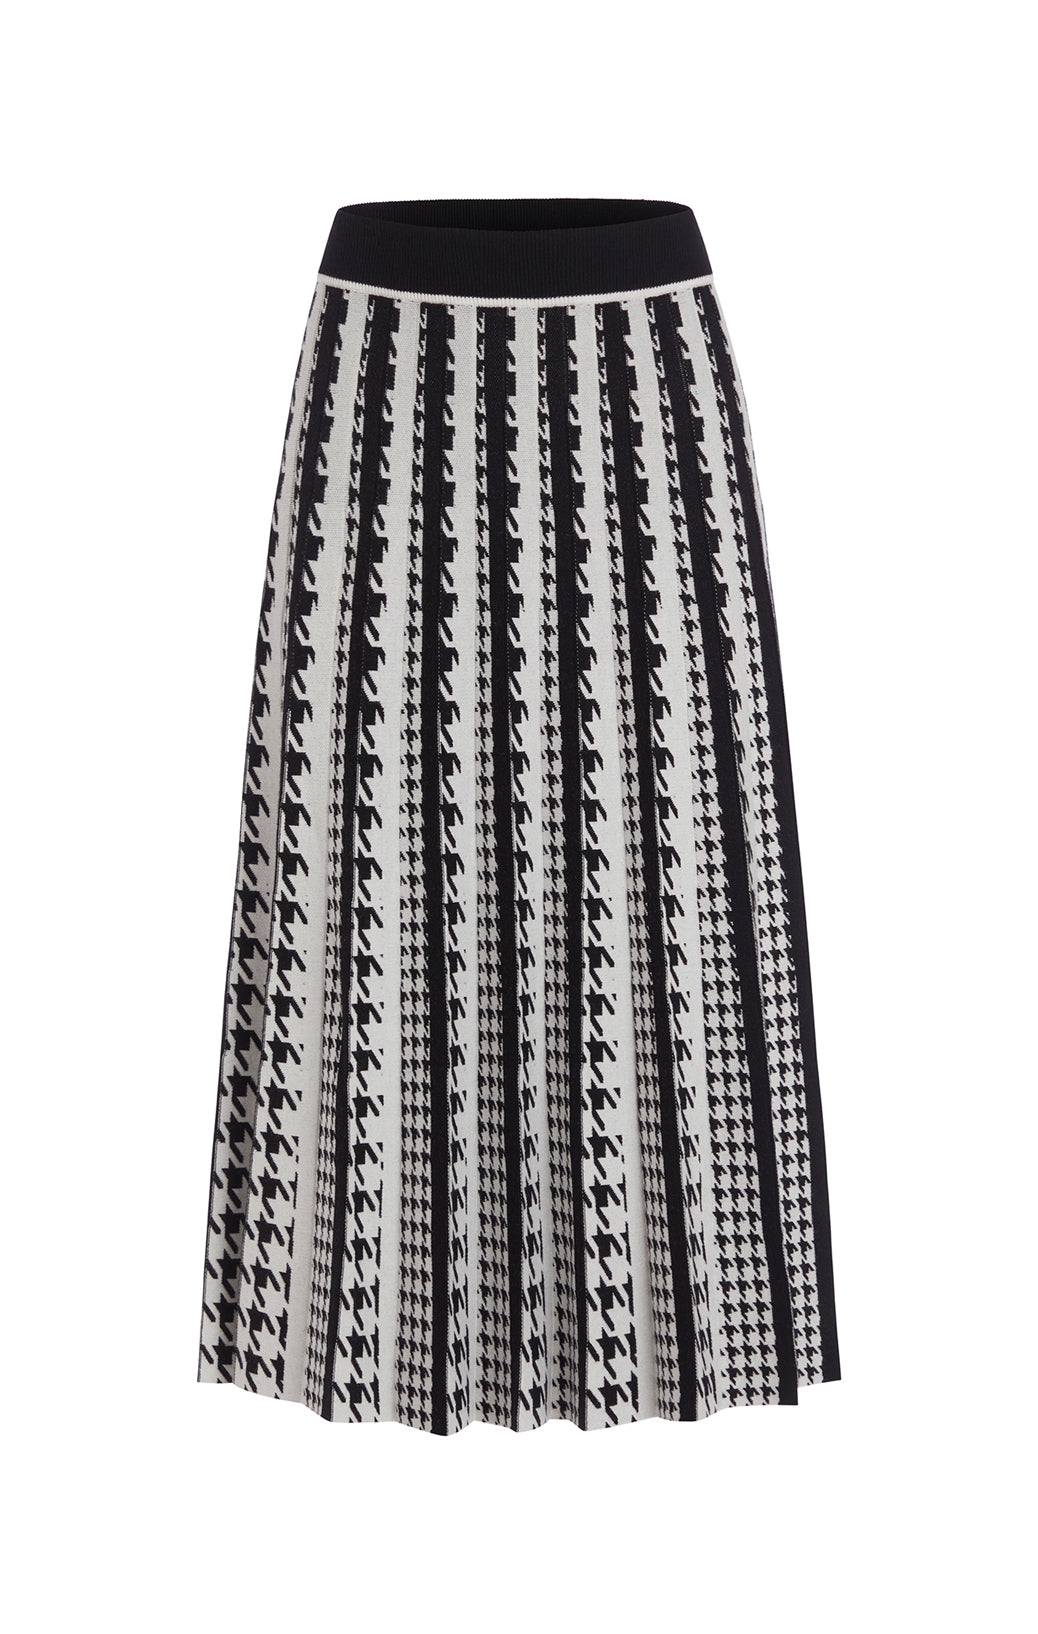 Anna Karina-Shell - Reversible Birdseye Jacquard Knit Shell - IMAGE